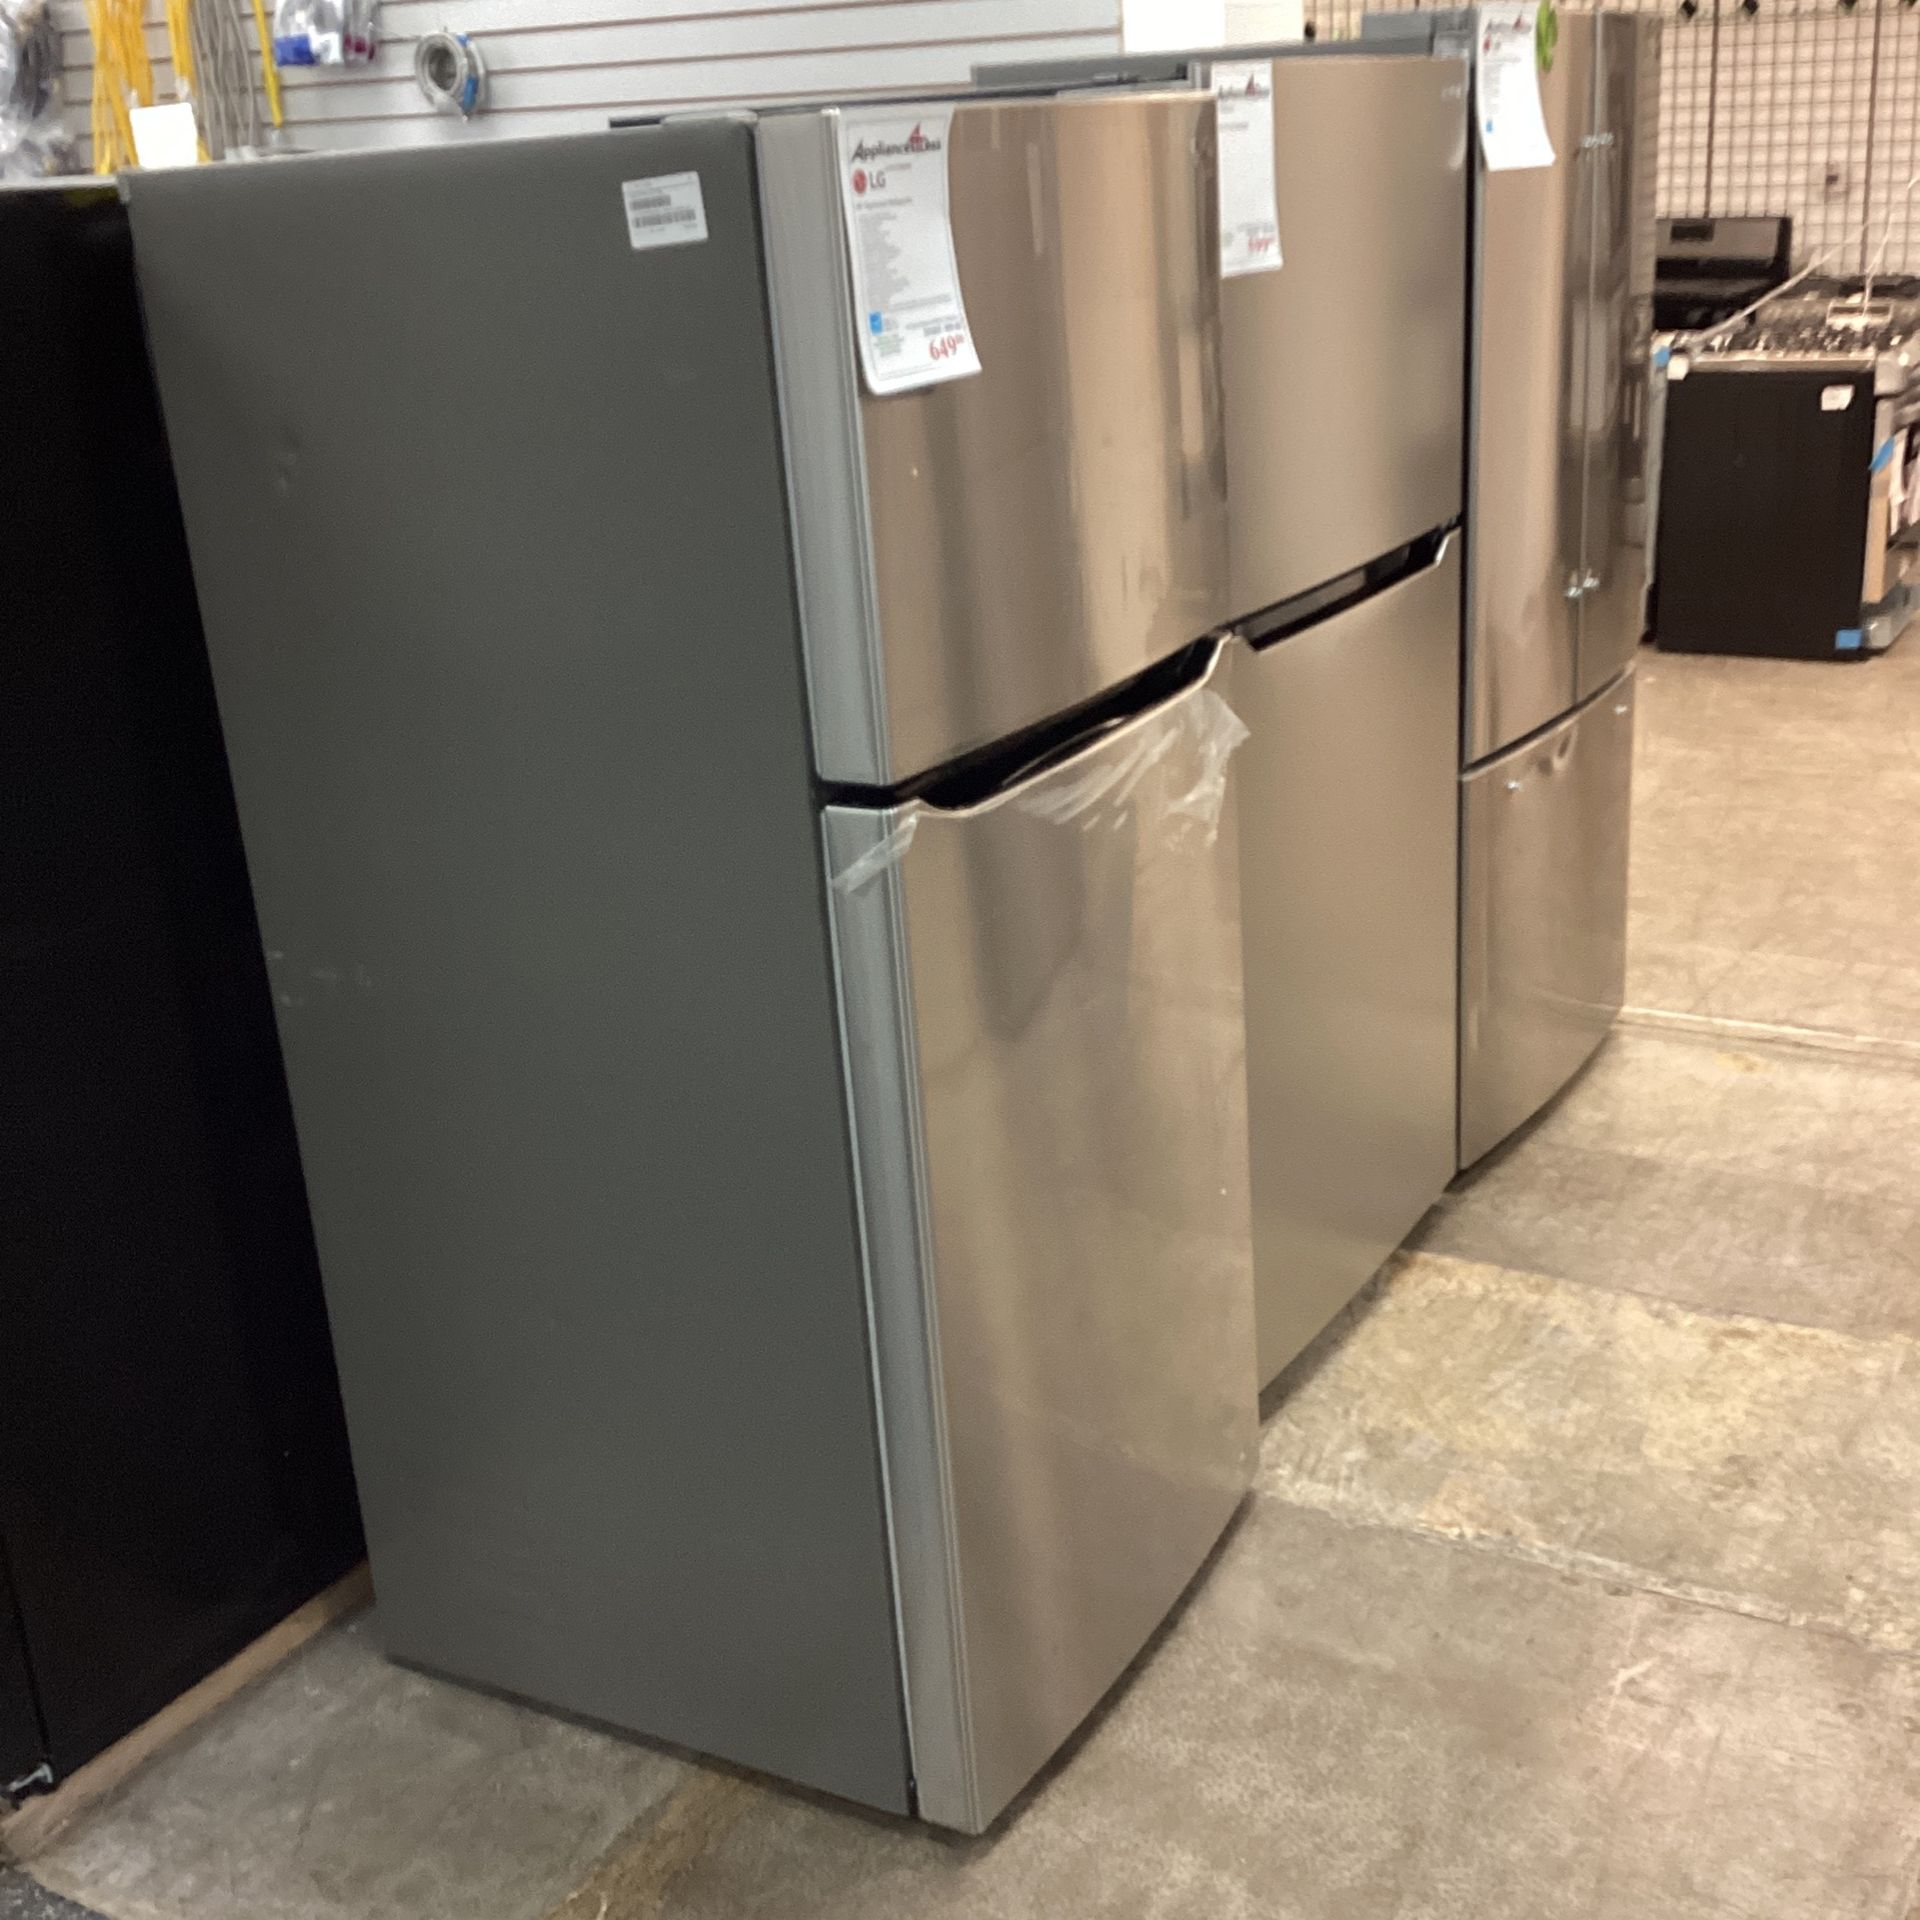 LG 30 inch top freezer refrigerator